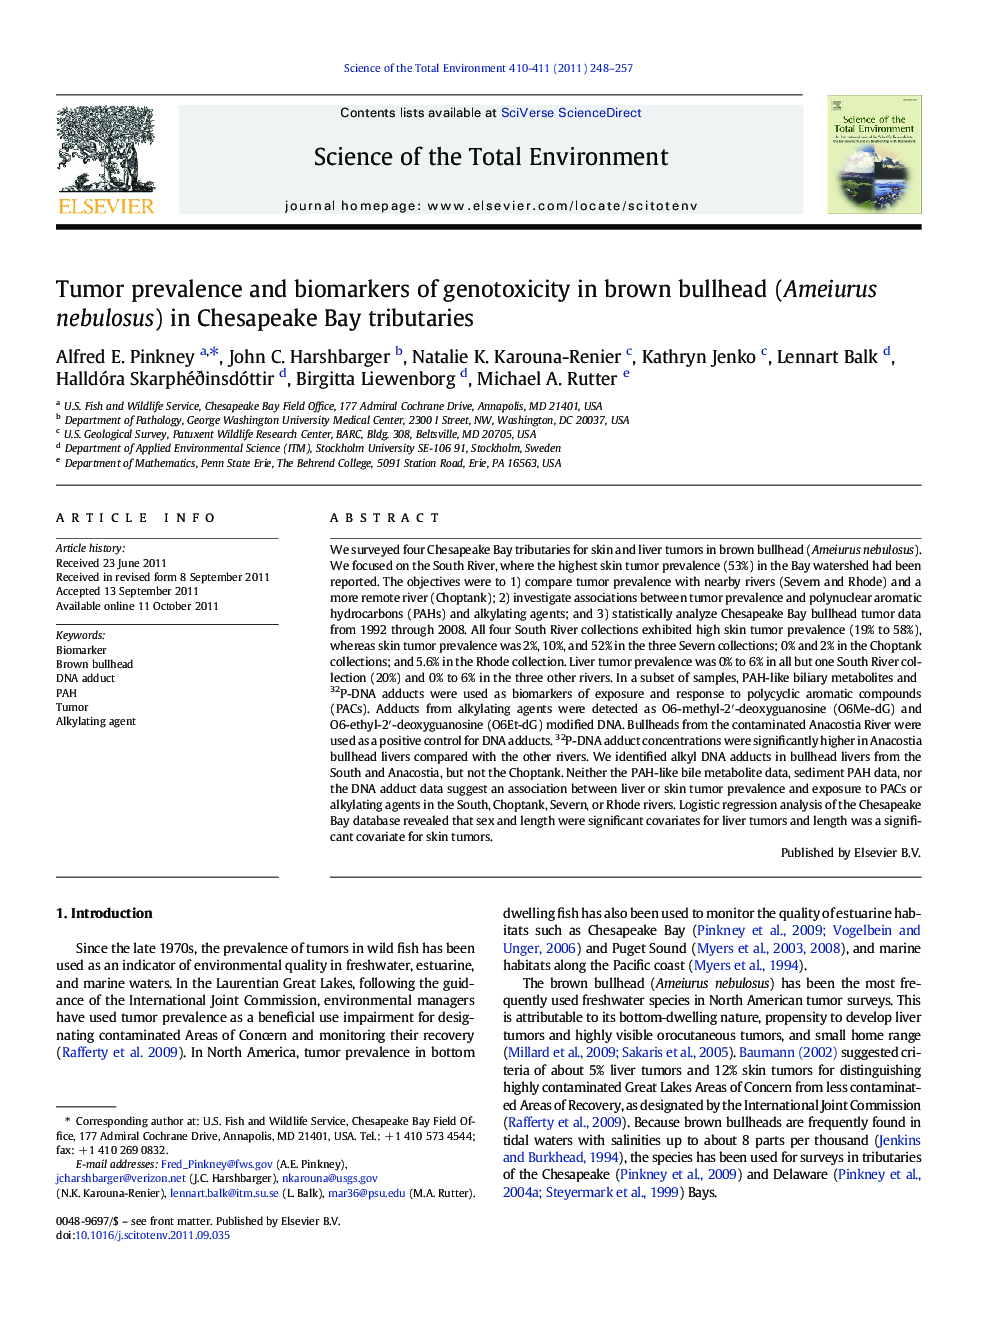 Tumor prevalence and biomarkers of genotoxicity in brown bullhead (Ameiurus nebulosus) in Chesapeake Bay tributaries